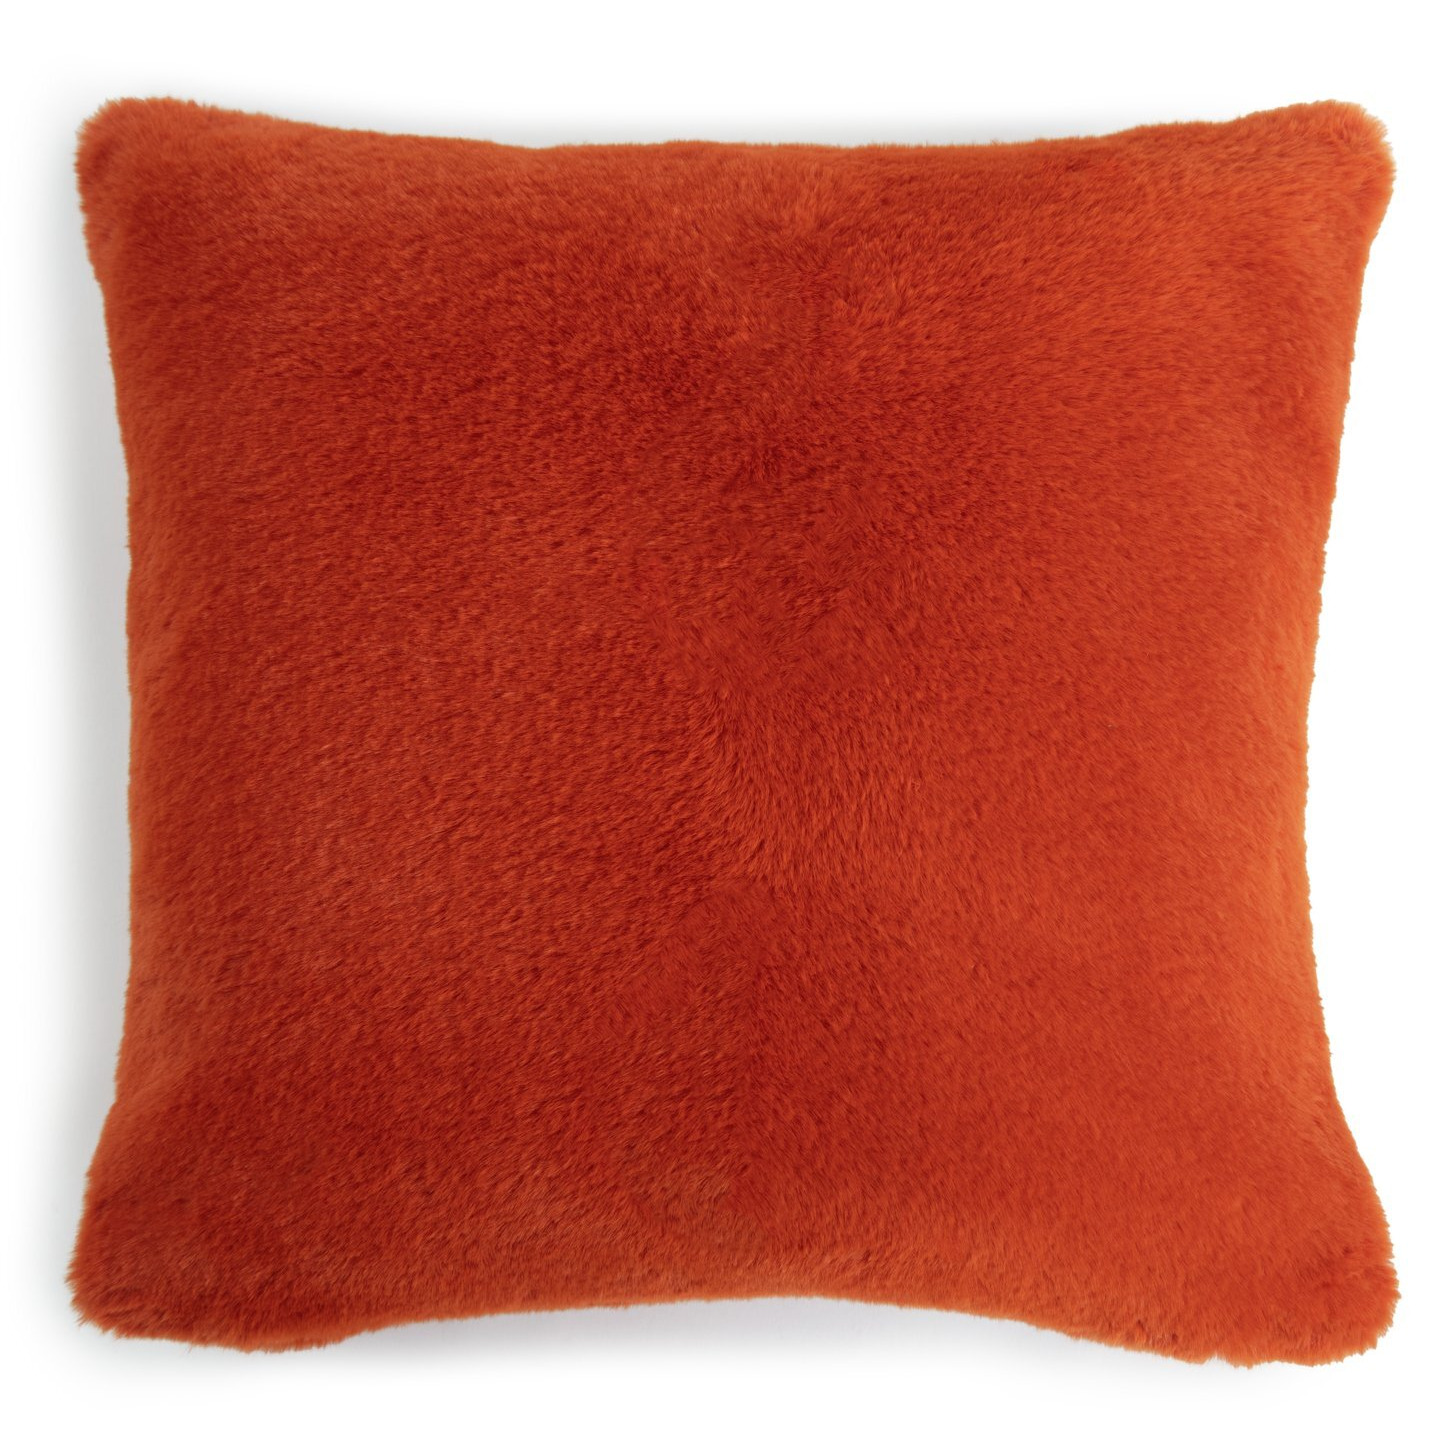 Habitat Plain Faux Fur Cushion - Burnt Orange - 43X43cm - image 1